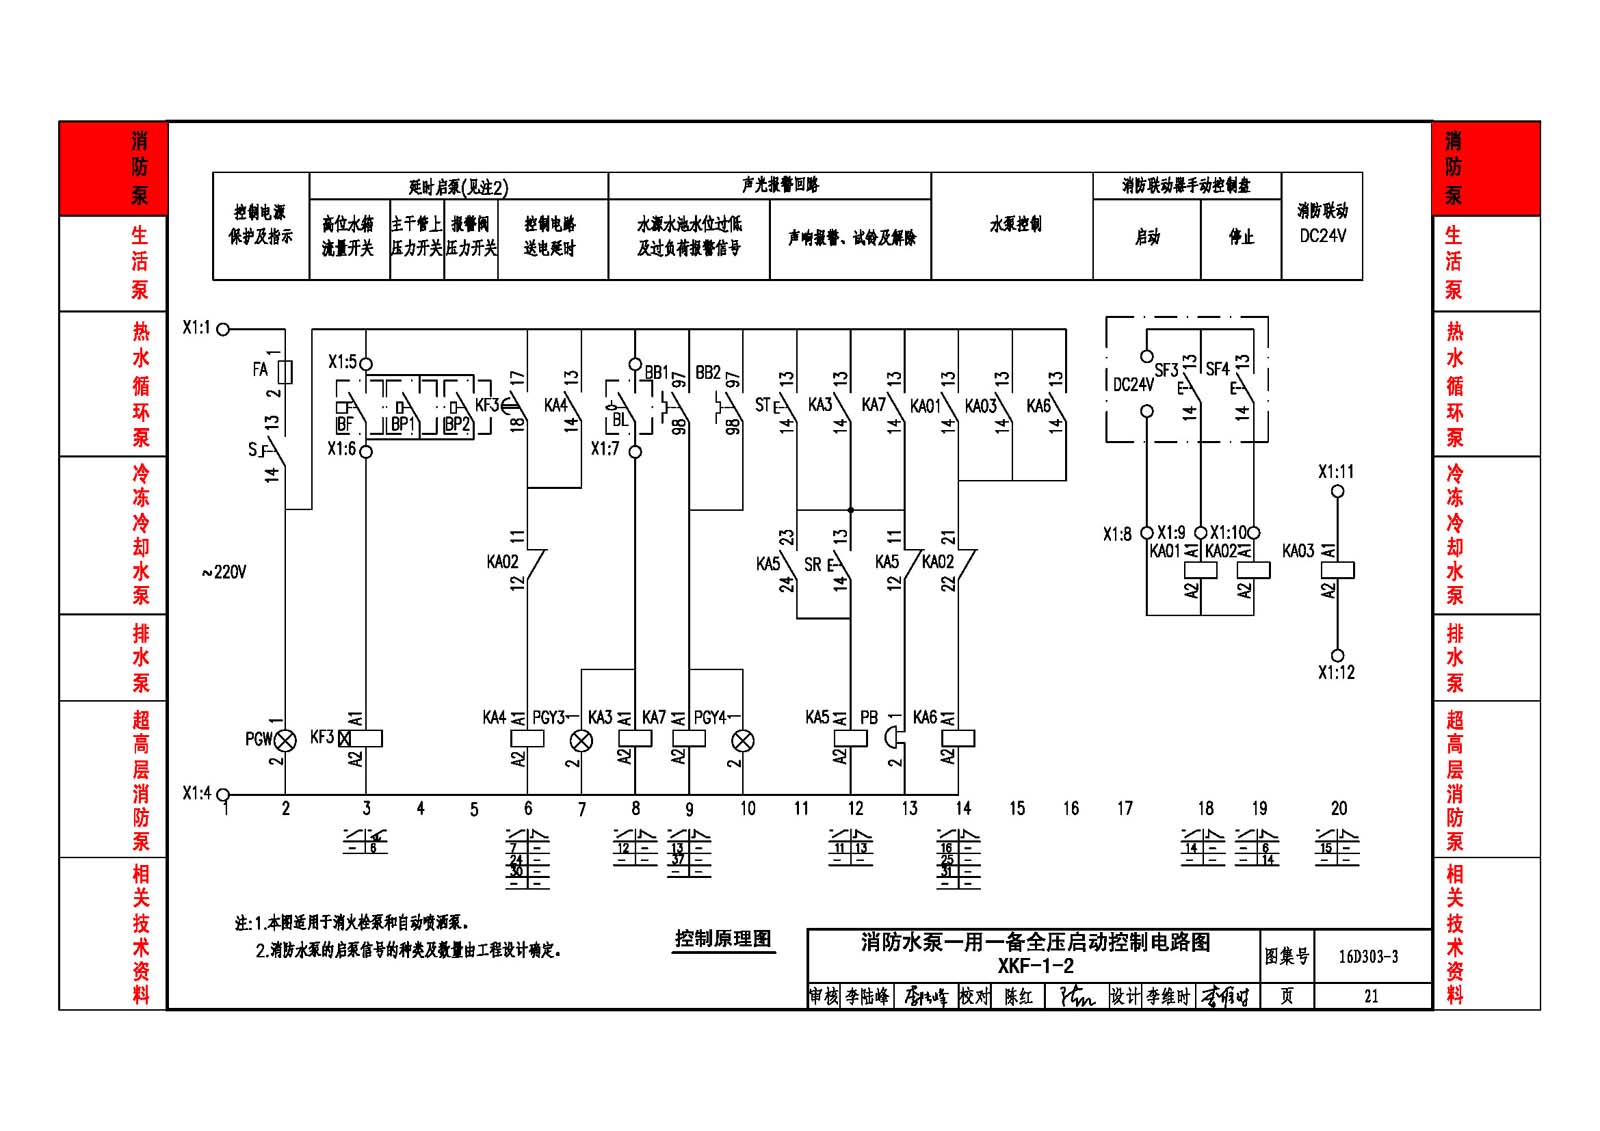 16D303-3:常用水泵控制电路图 - 国家建筑标准